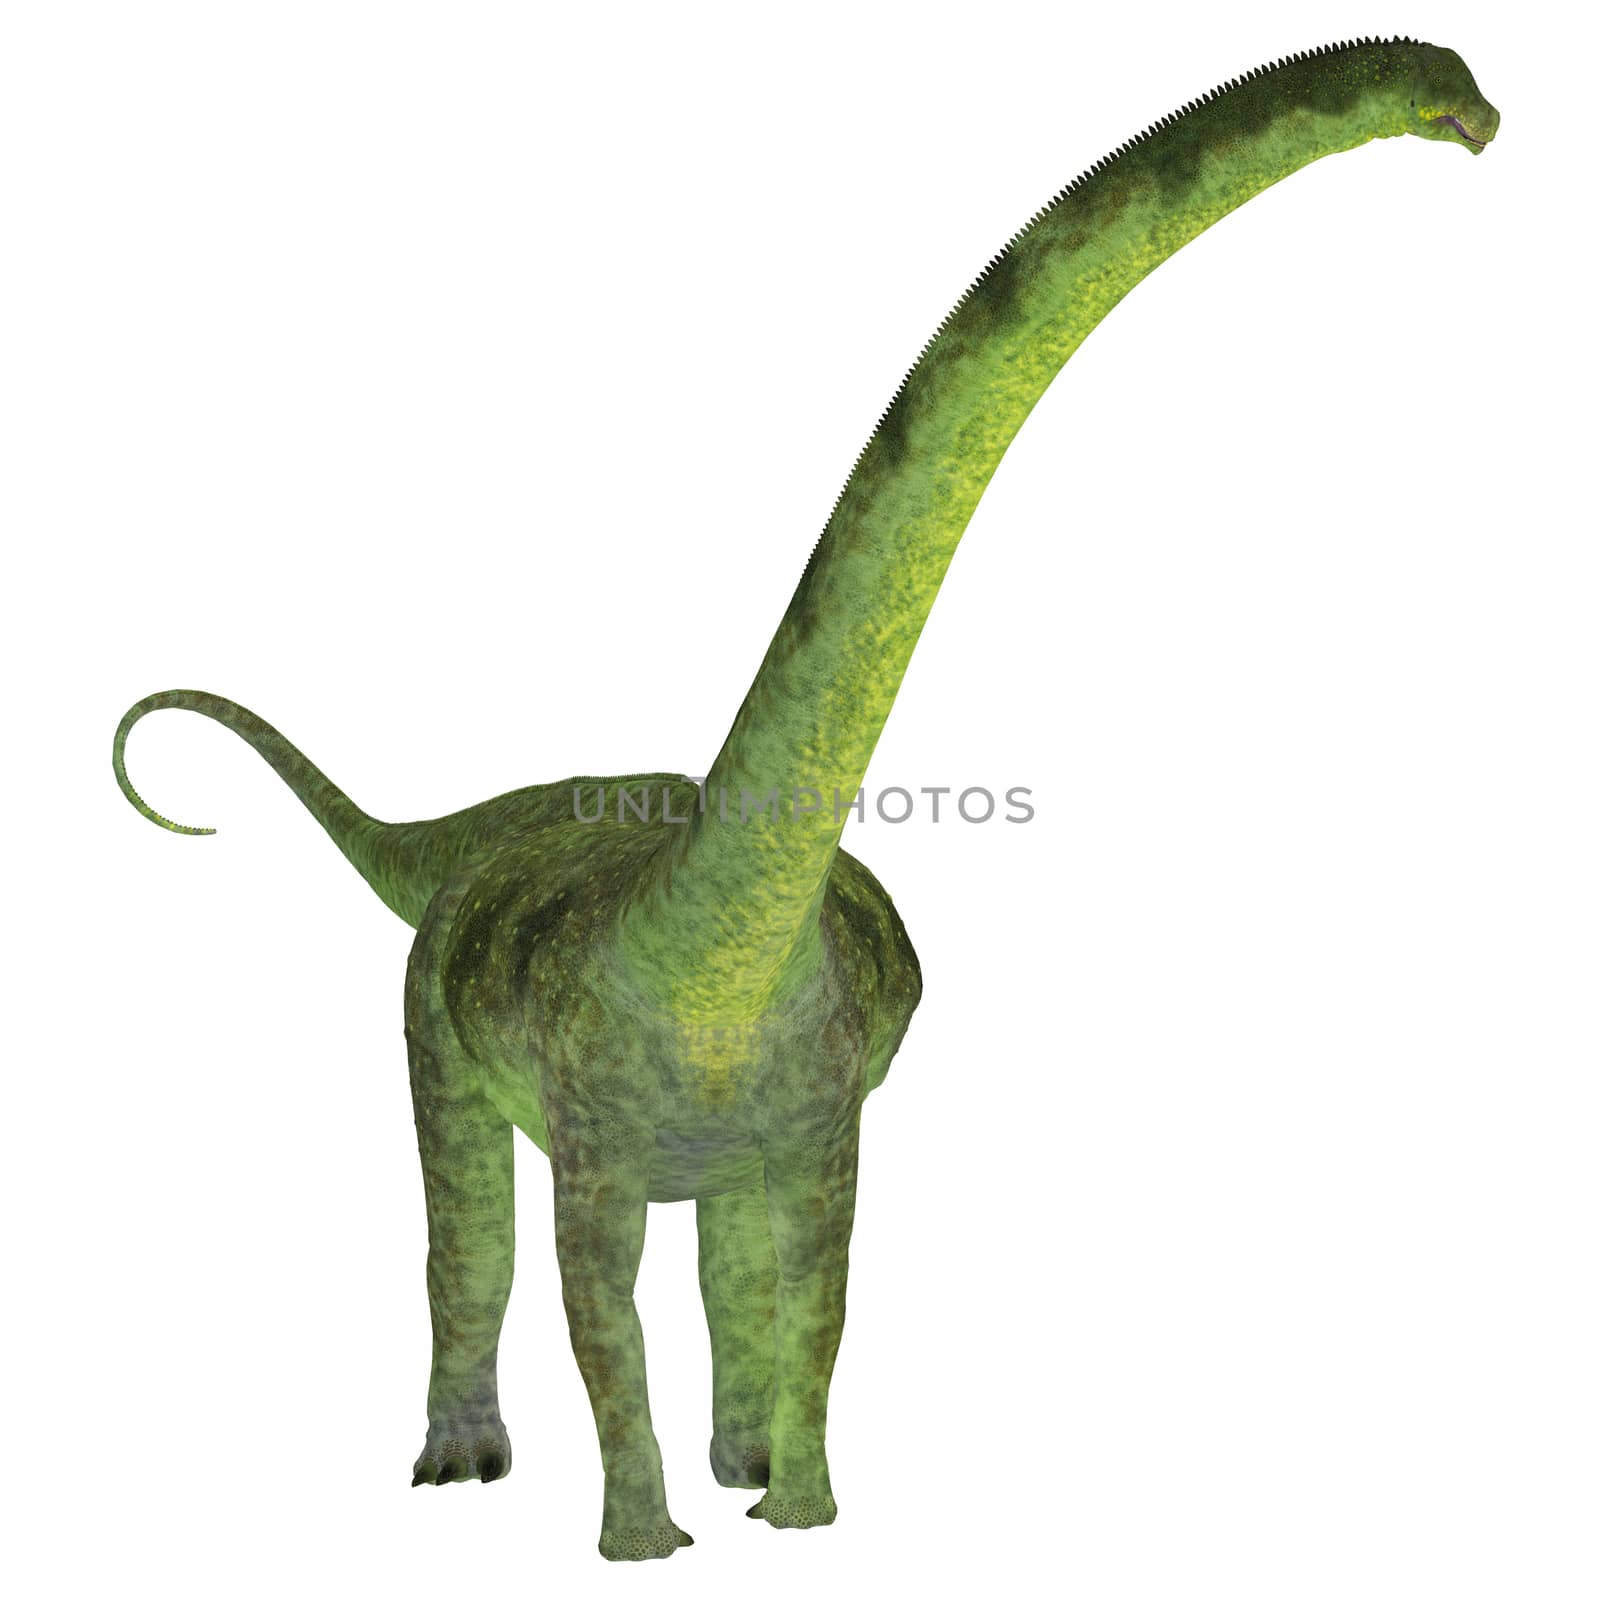 Puertasaurus Dinosaur on White by Catmando